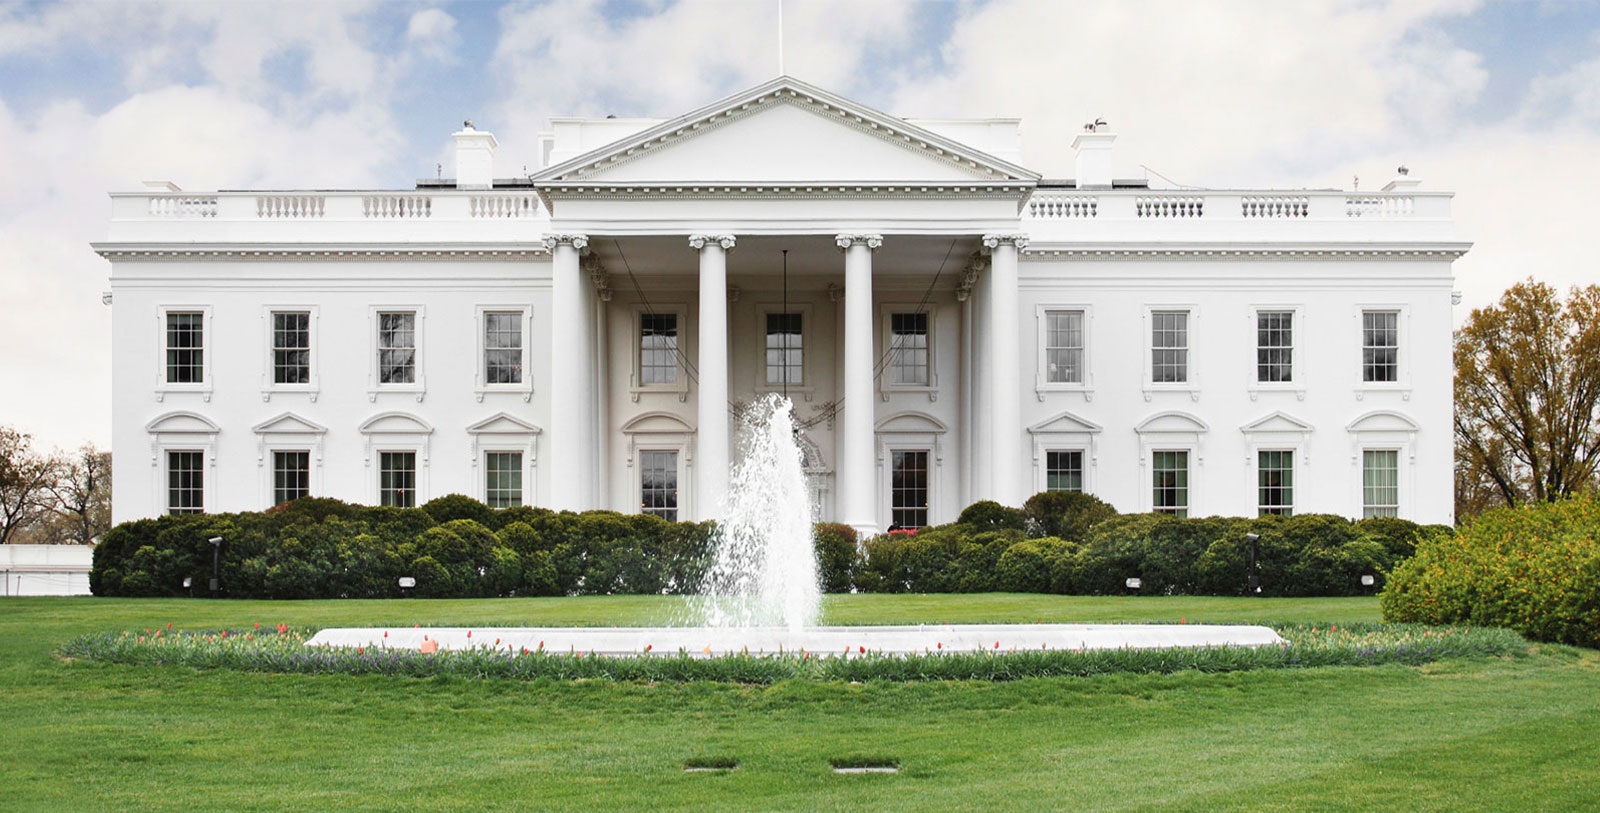 Explore Pennsylvania Avenue and admire the Neoclassical architecture of the White House.